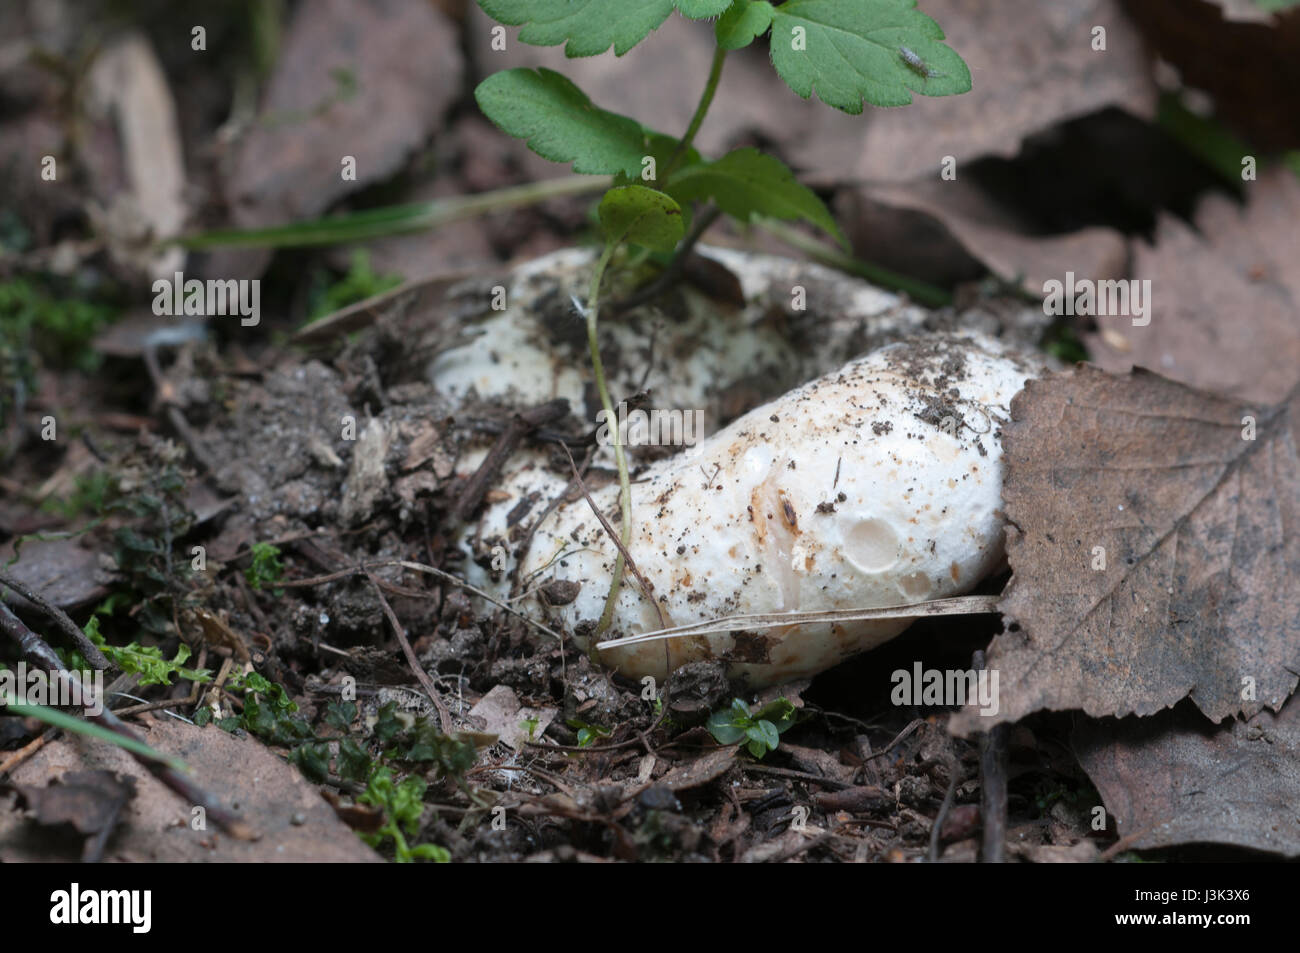 Milk-white brittlegill (Russula delica) mushroom, close up shot Stock Photo